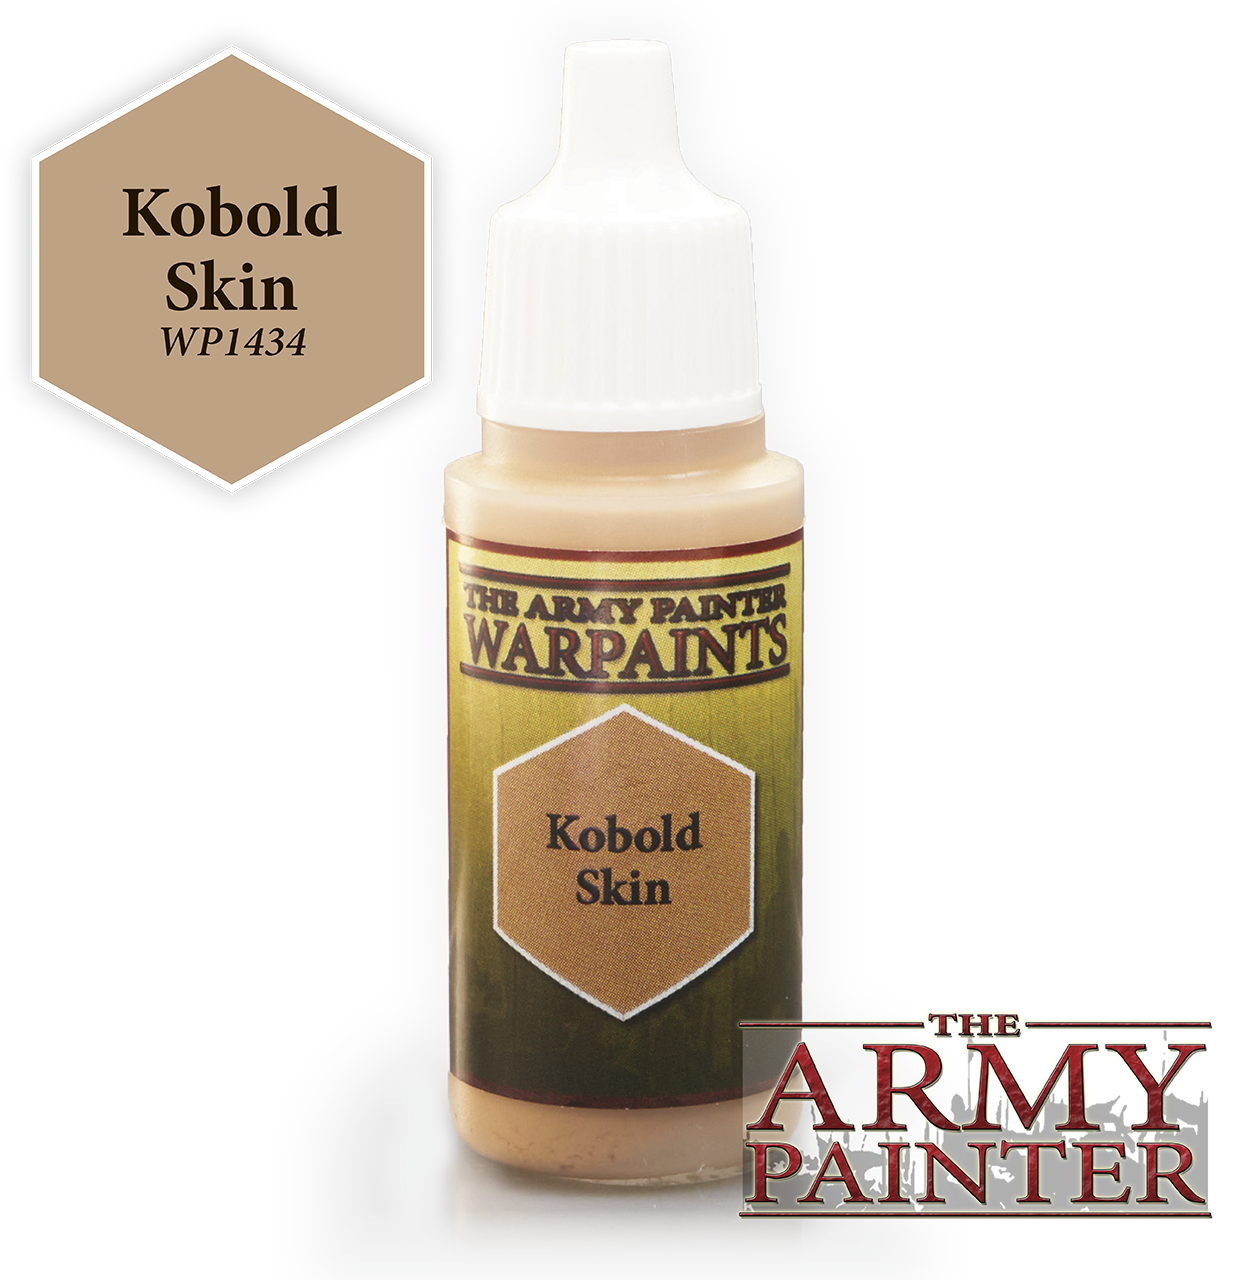 The ARMY PAINTER: Acrylics Warpaint - Kobold Skin | Tacoma Games